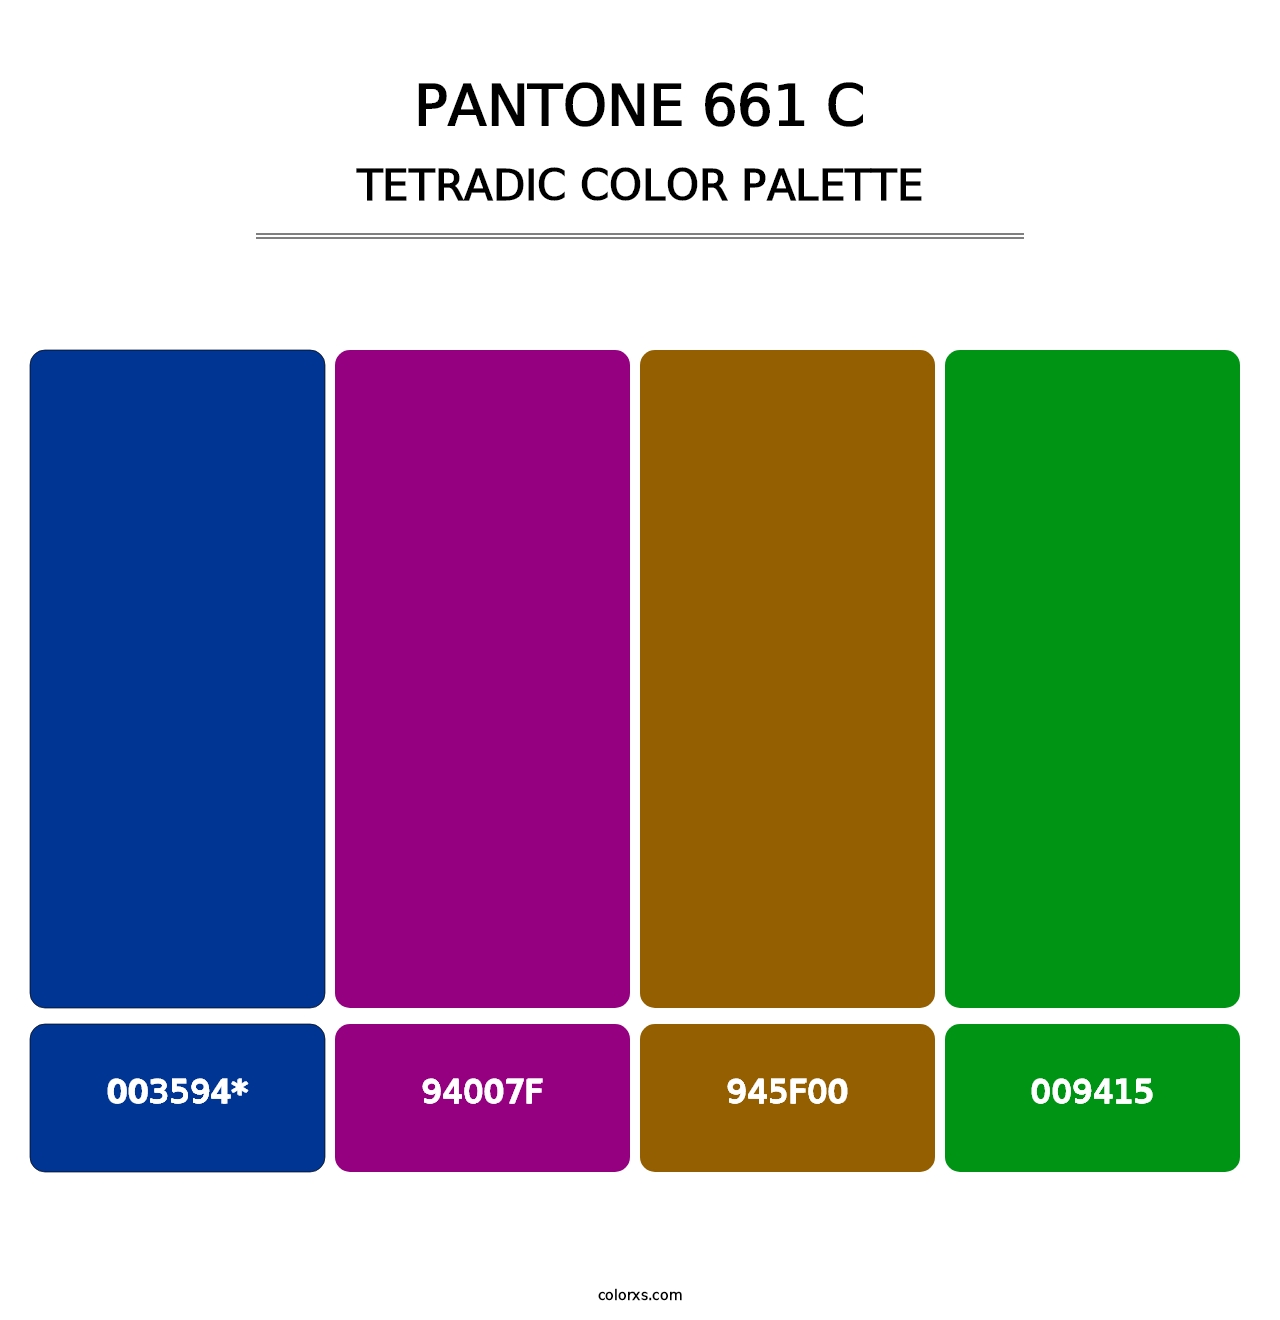 PANTONE 661 C - Tetradic Color Palette